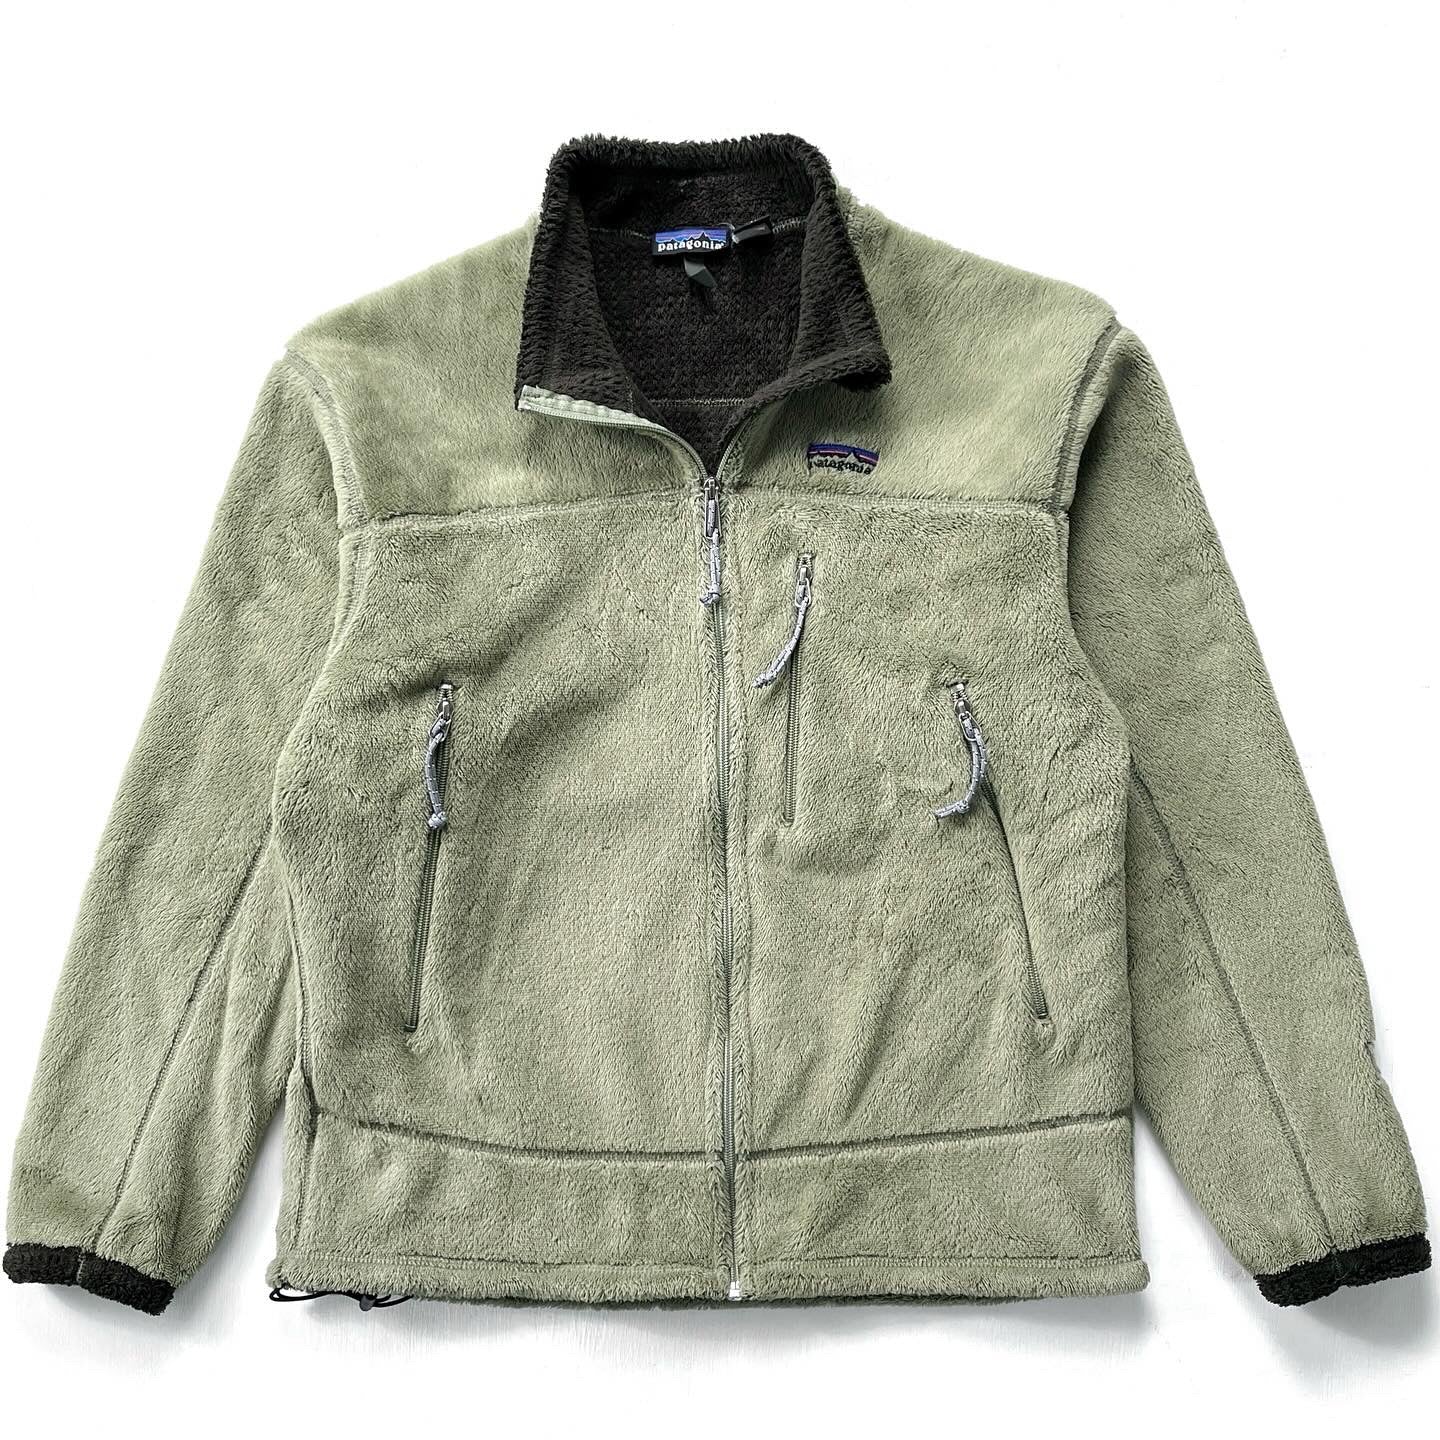 2001 Patagonia R4 Fleece Regulator Jacket, Weathered Green (L)